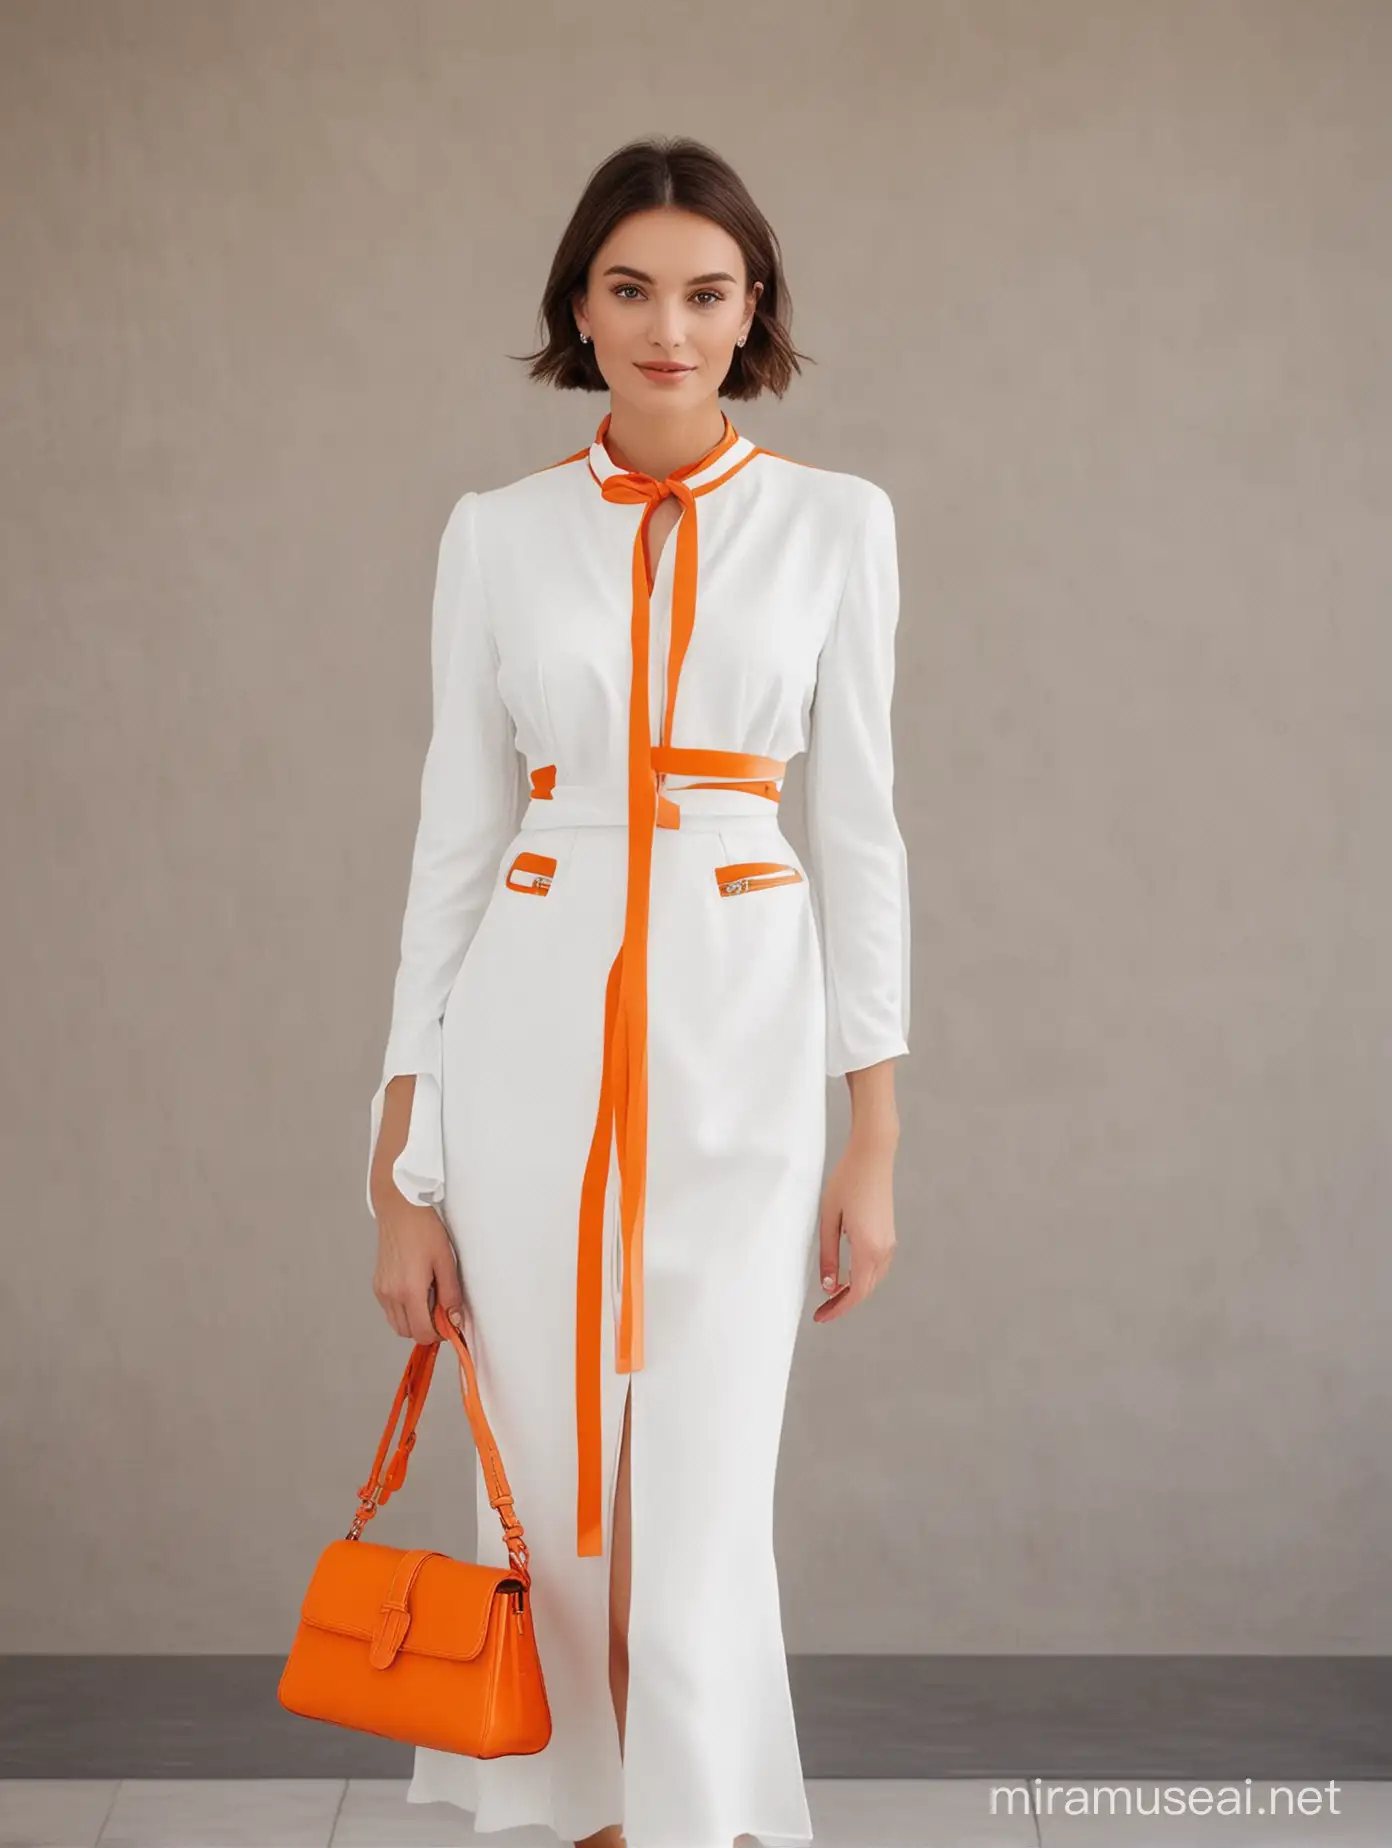 Elegant Lady in White and Orange Attire Poses Gracefully